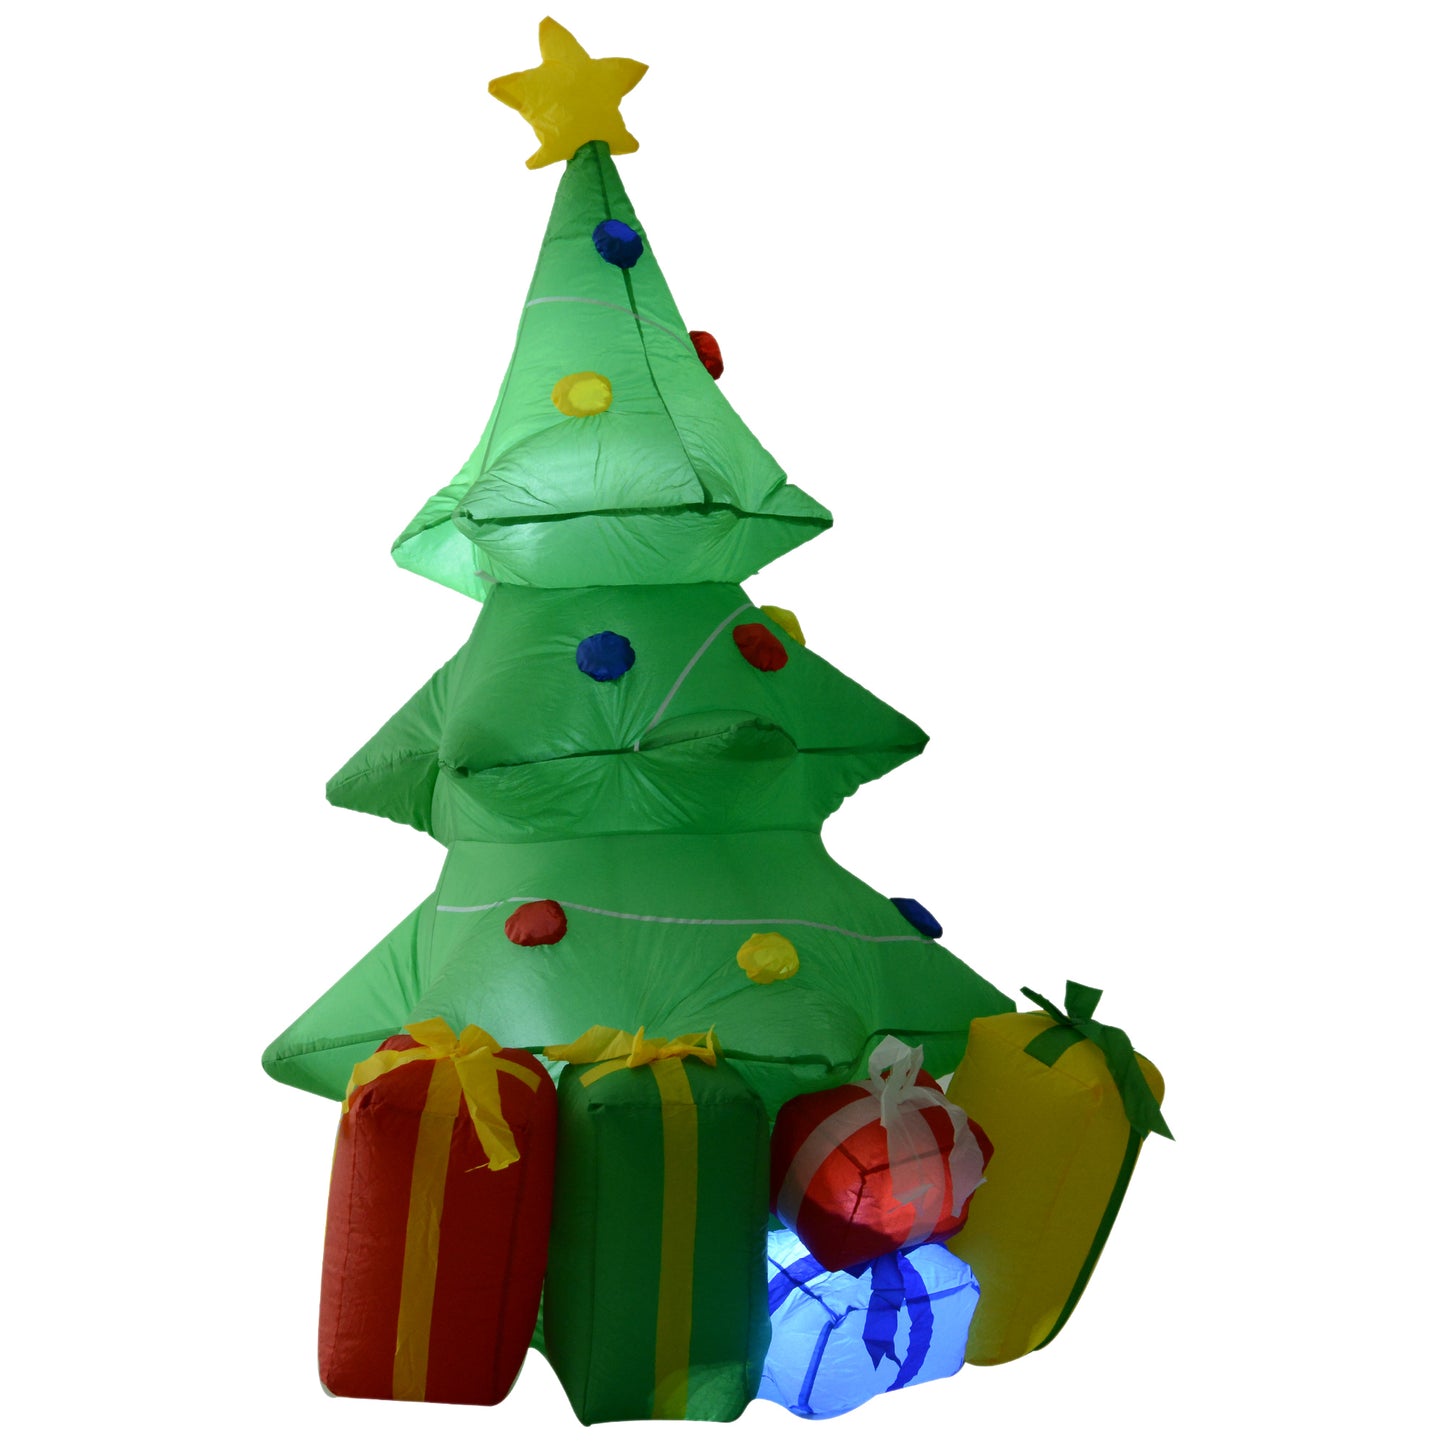 HOMCOM 1.5m Inflatable Christmas Tree Decoration W/LED lights, Polyester Fabric-Multicolour